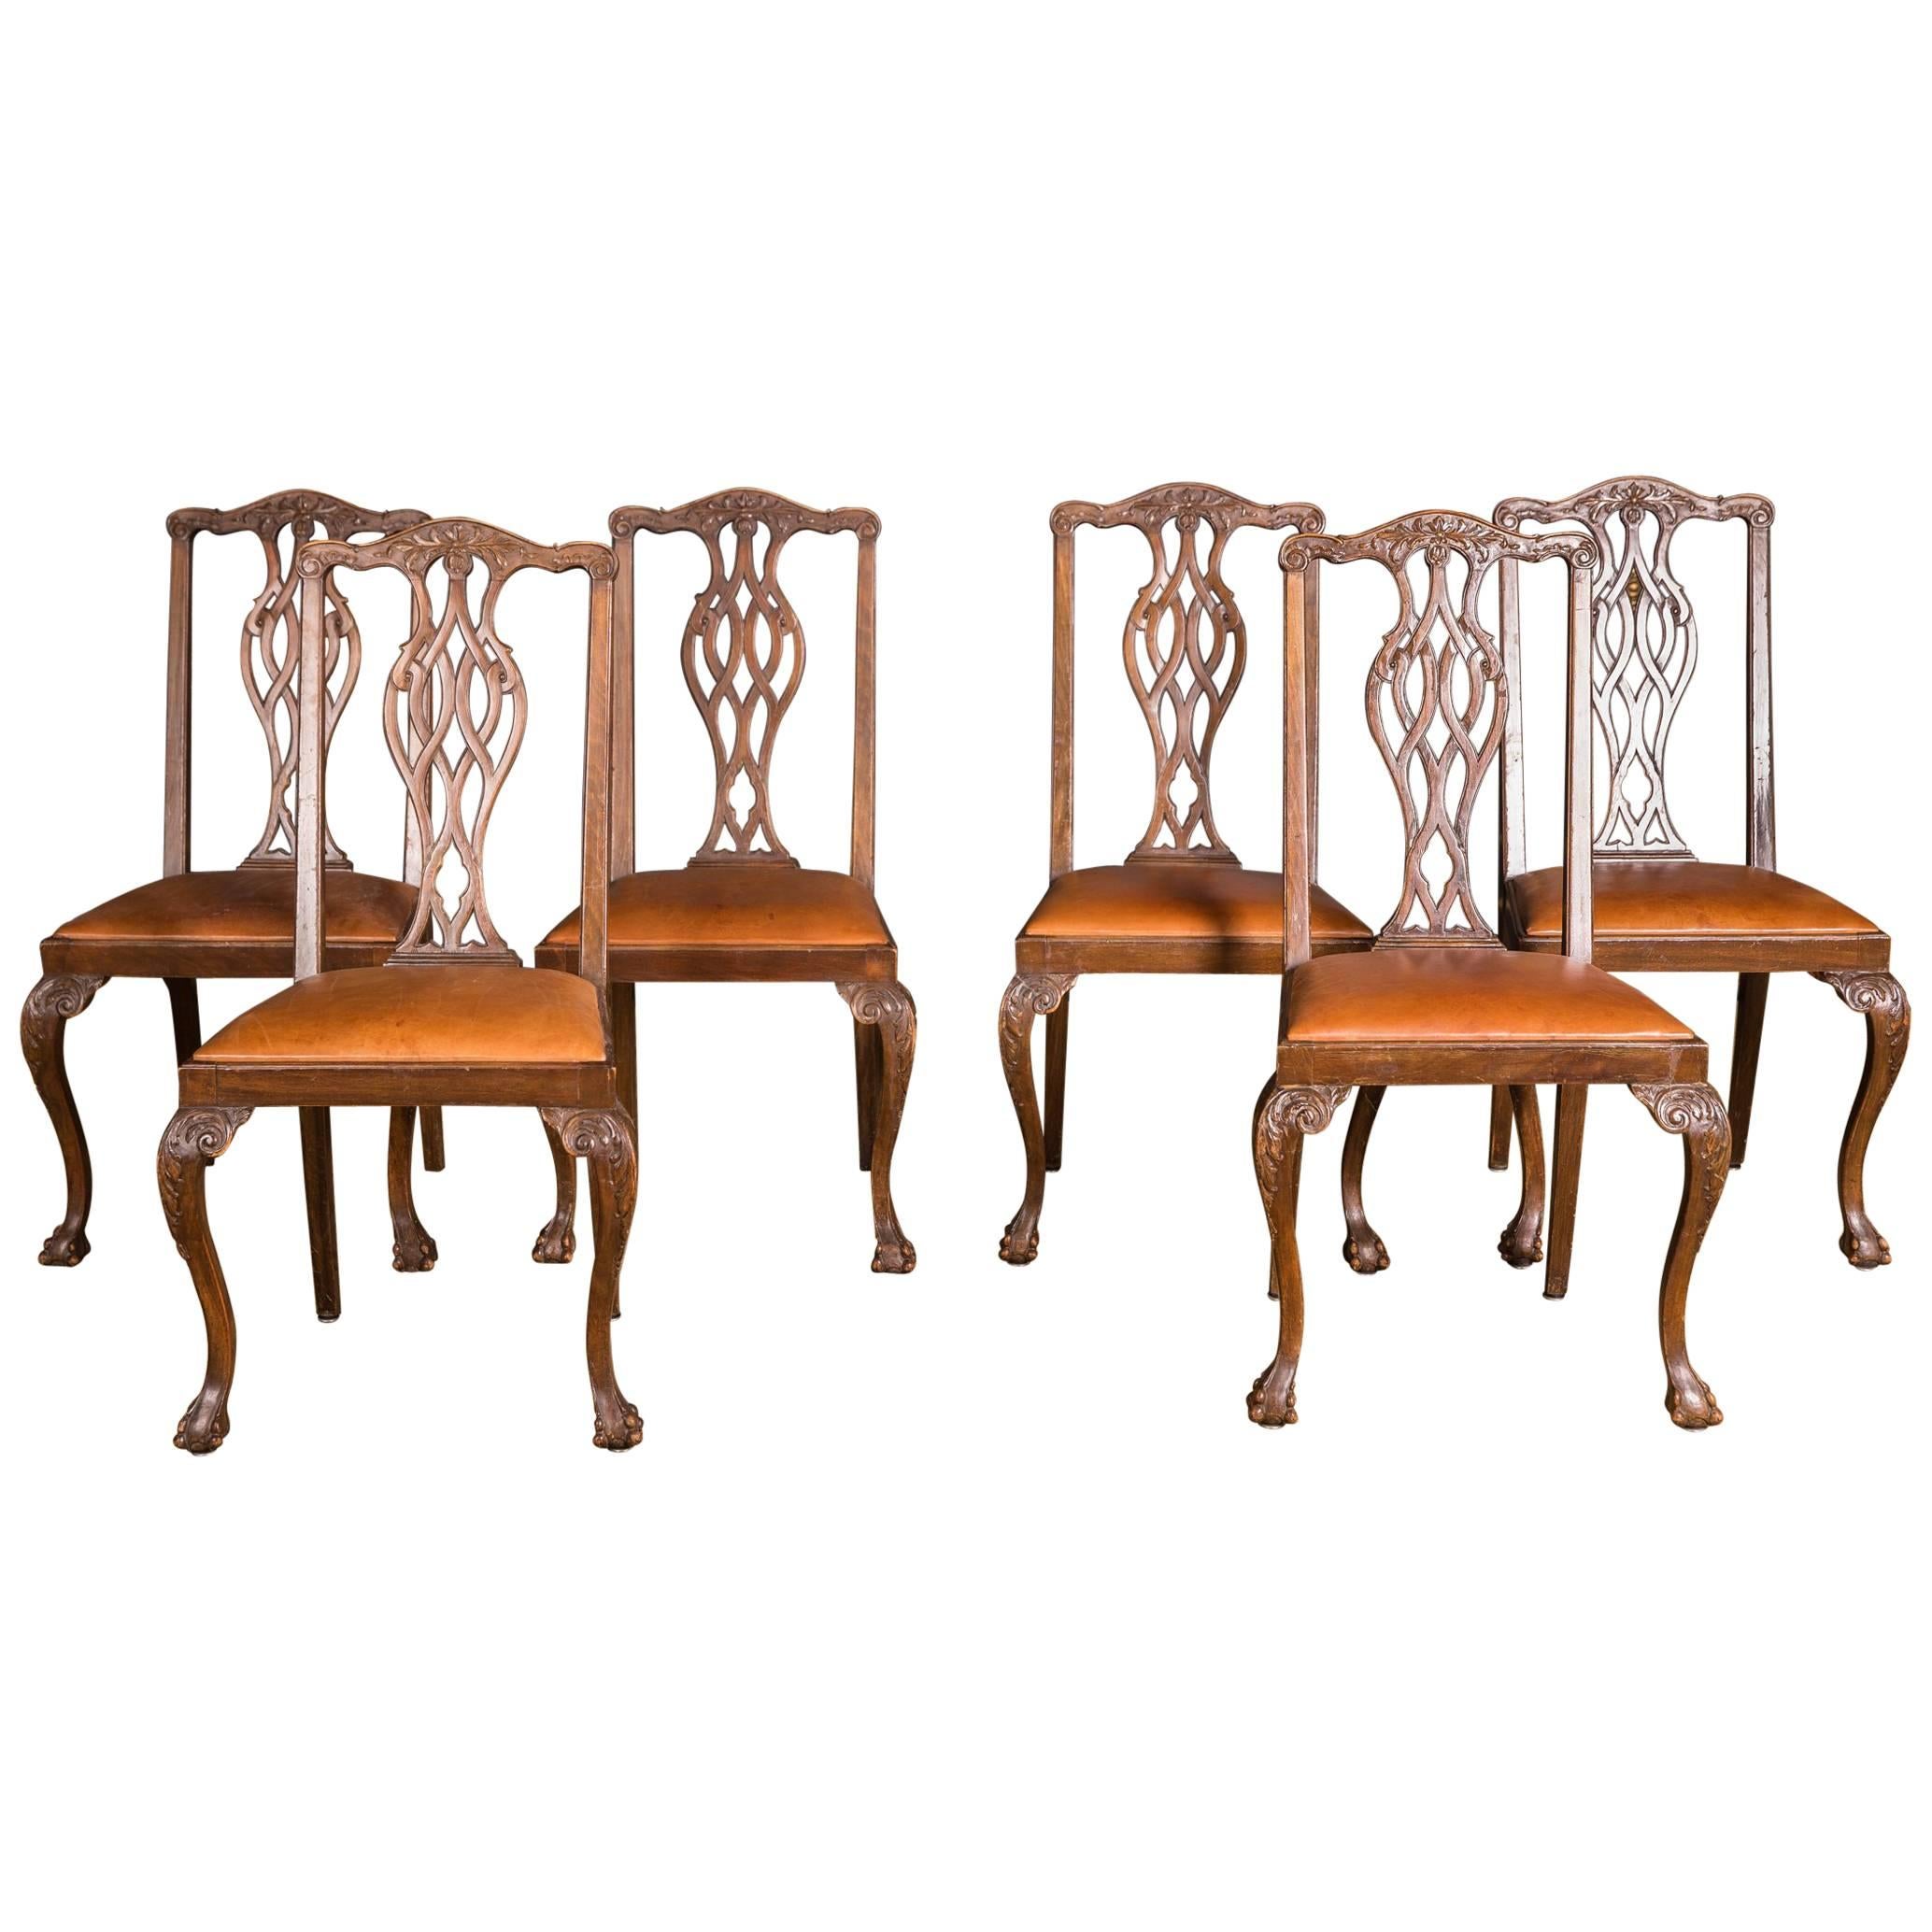 Original Set of Six Chairs Neo Baroque, circa 1870 Walnut Veneer